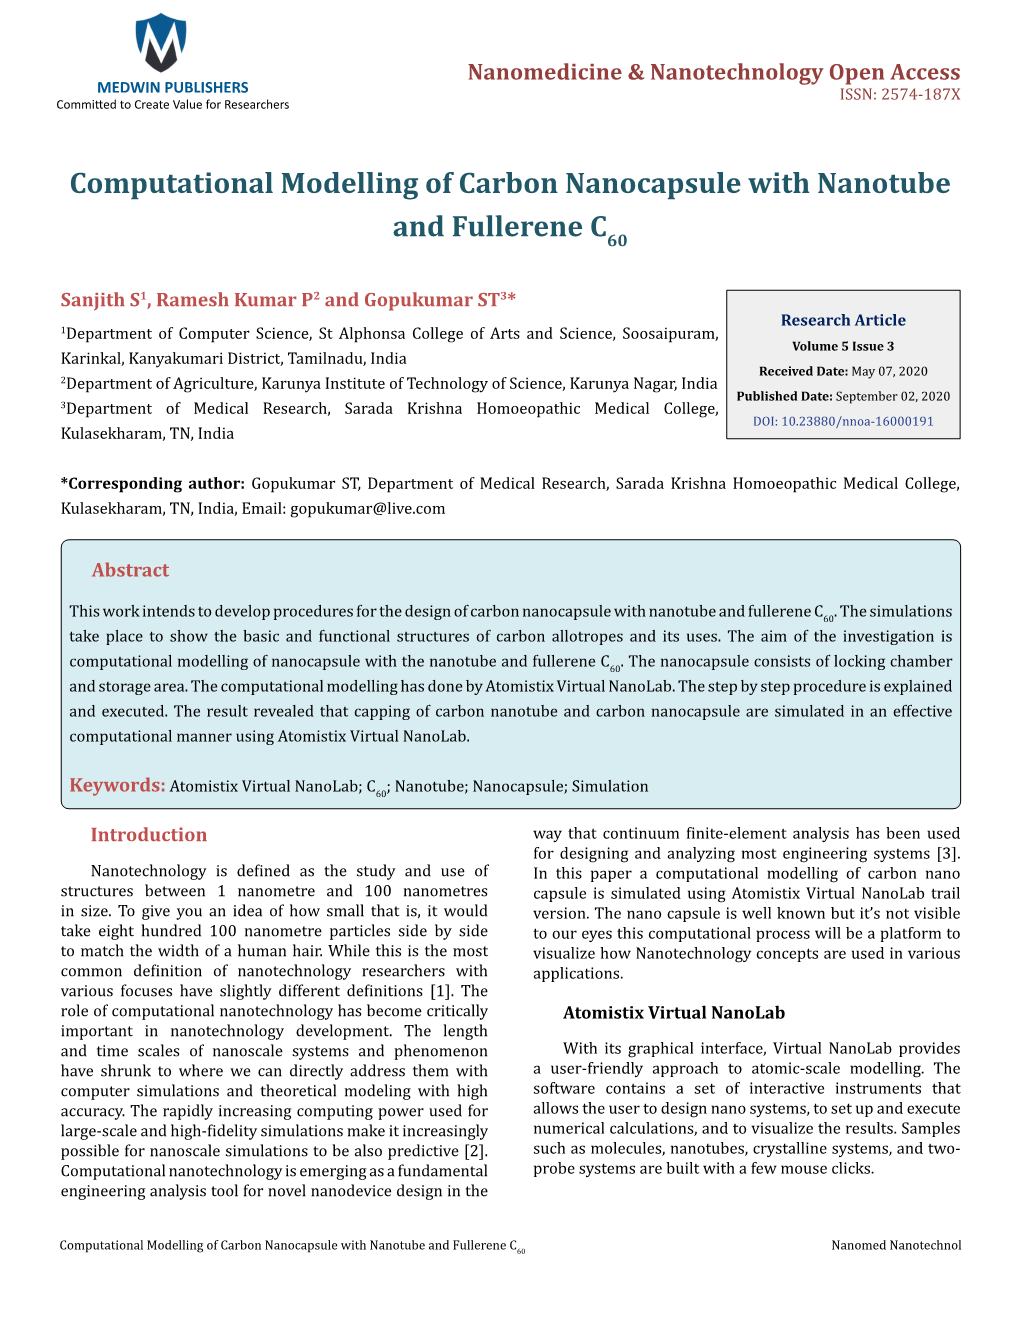 Computational Modelling of Carbon Nanocapsule with Nanotube